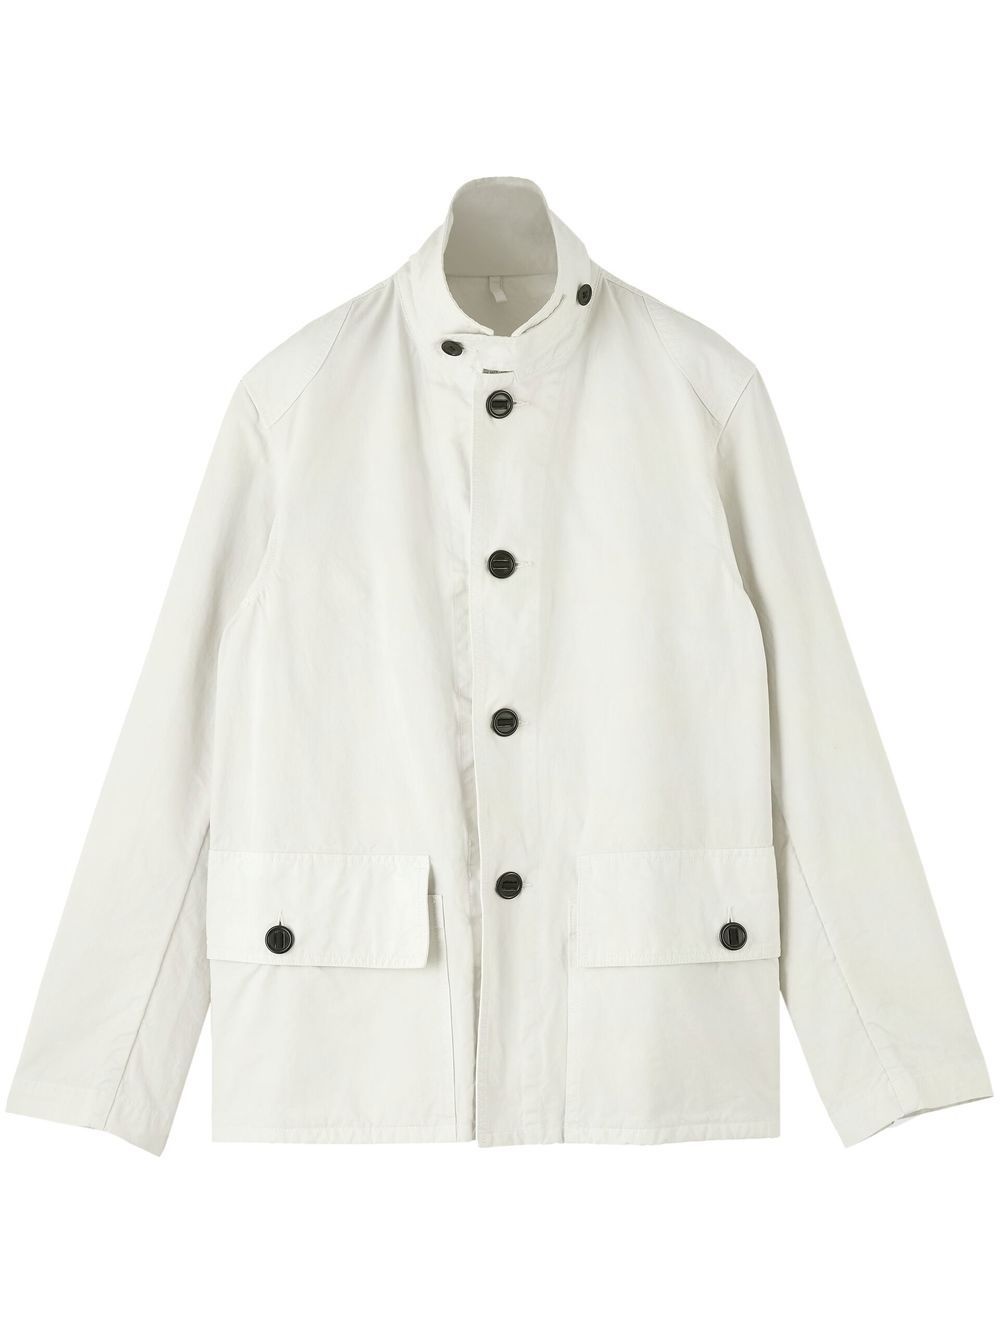 BM1-4 Chore jacket - 1